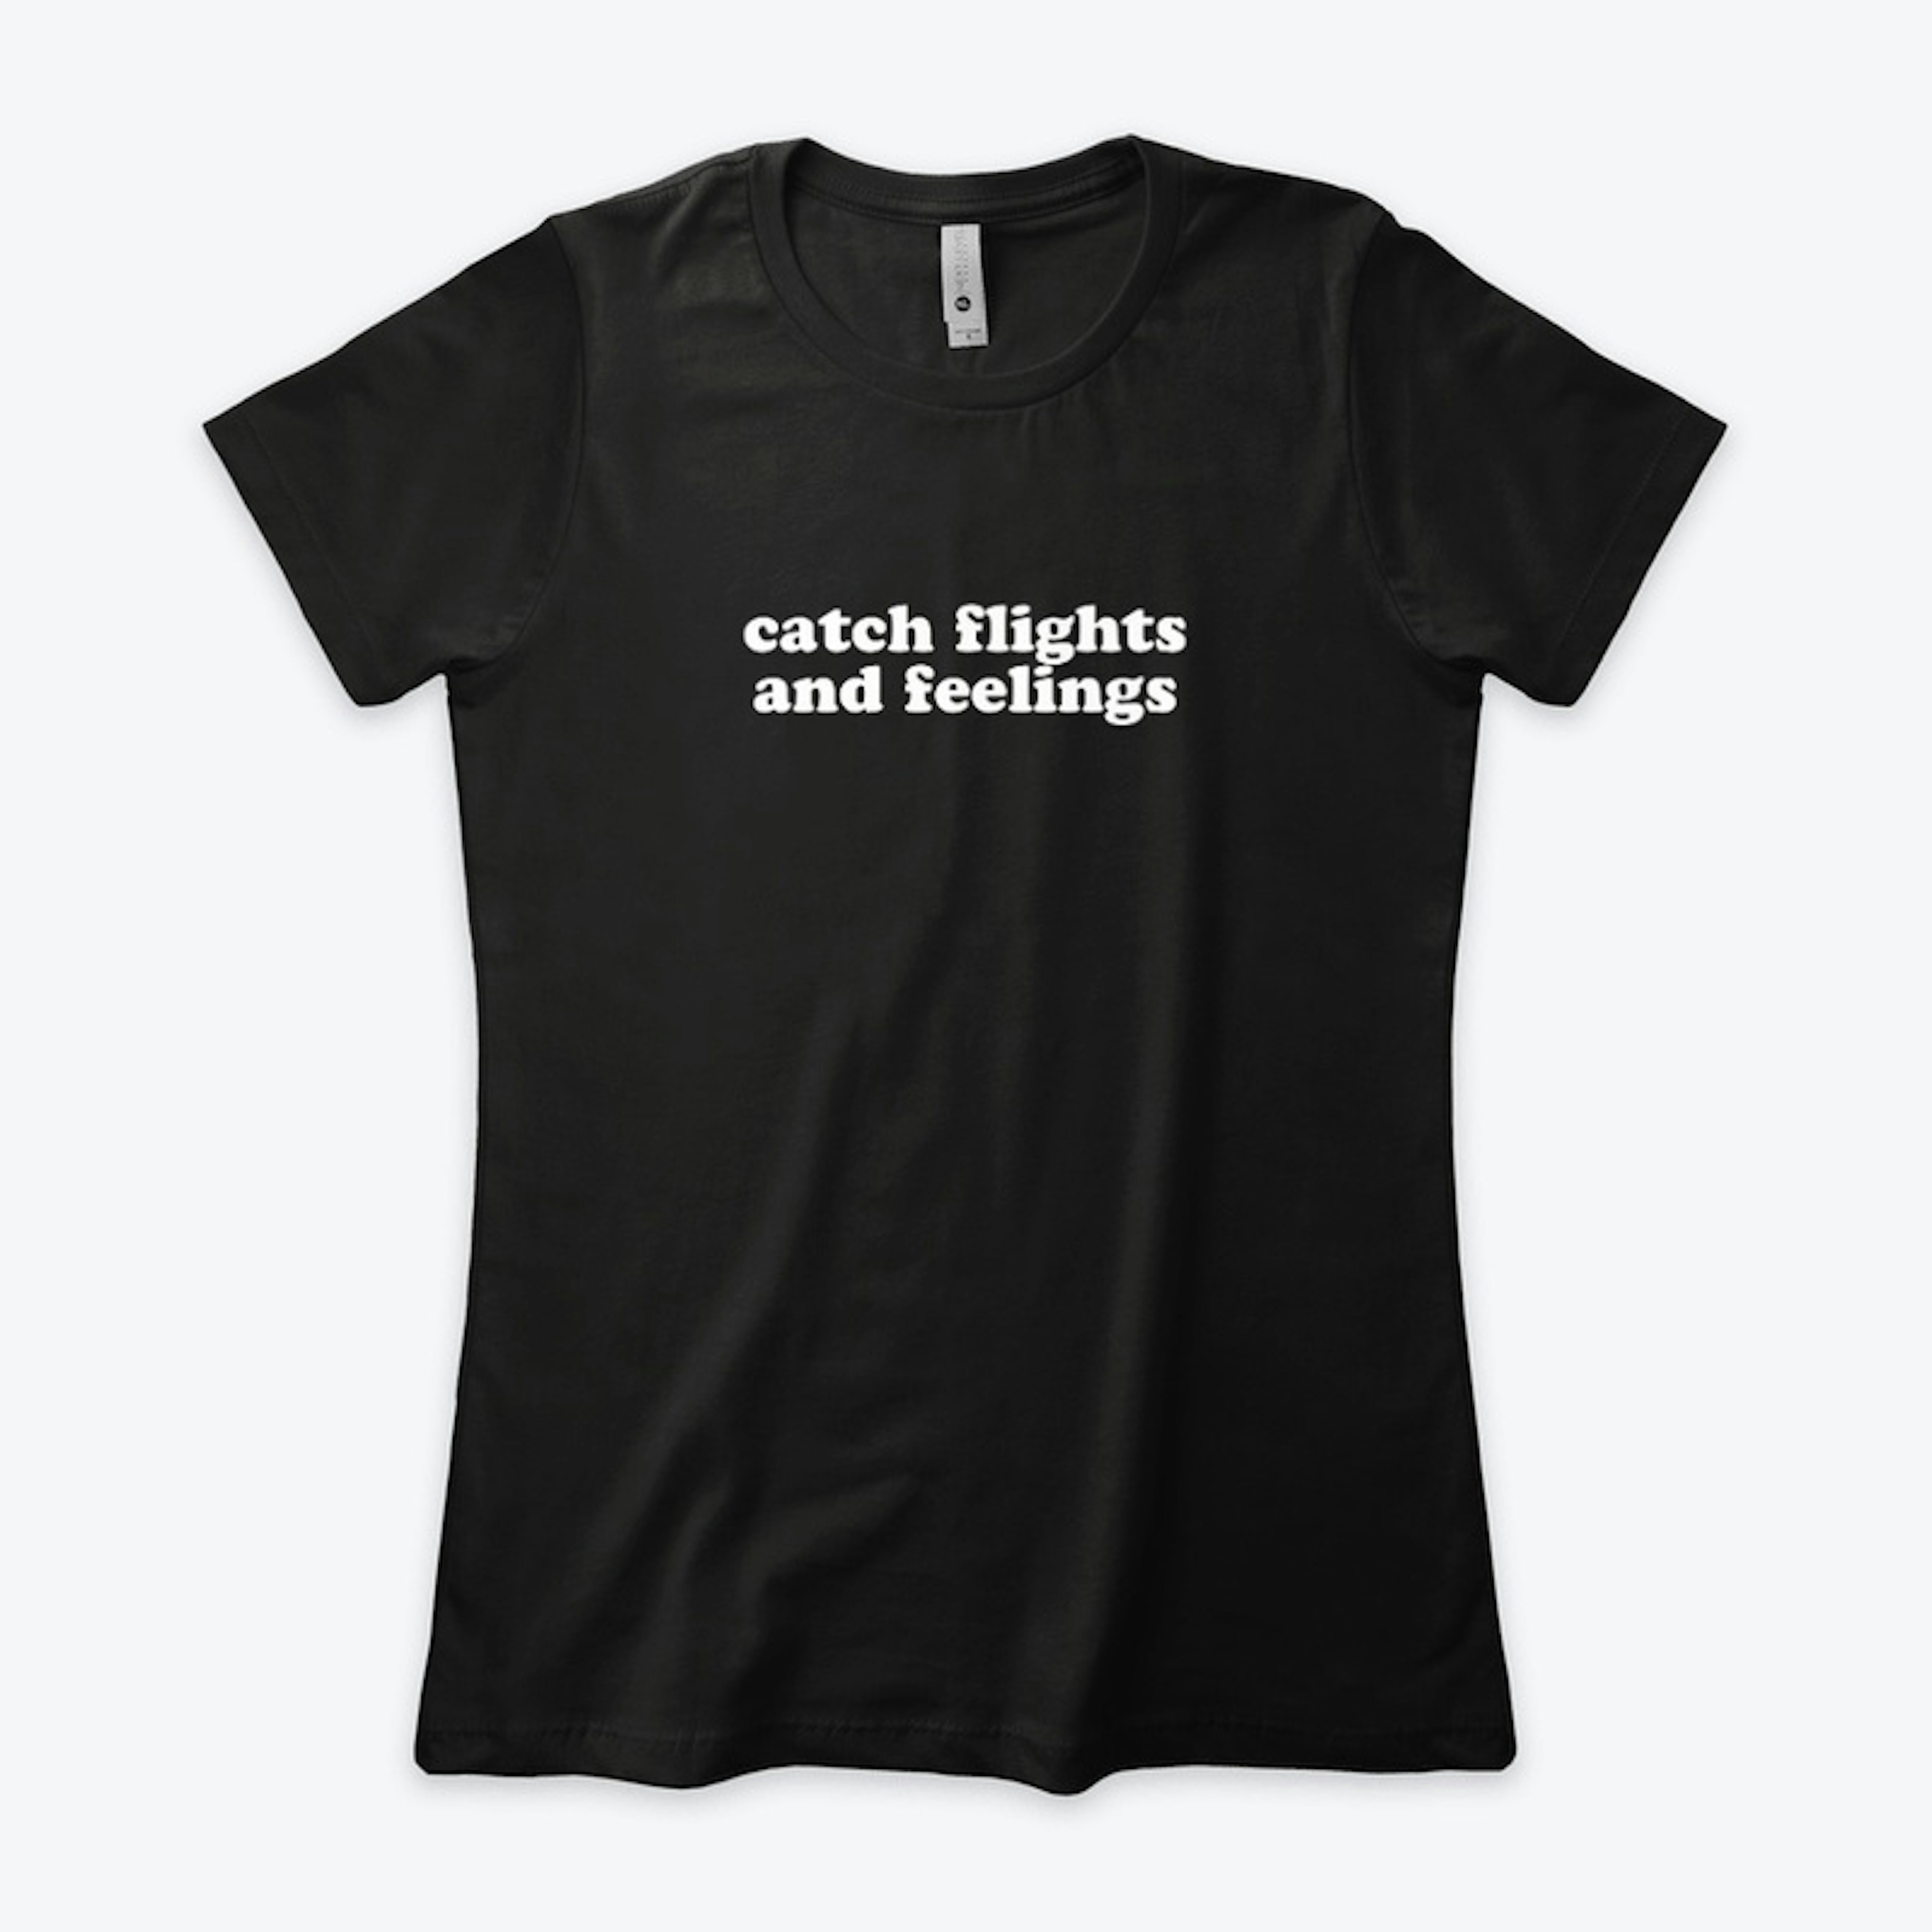 Catch Flights and Feelings tee